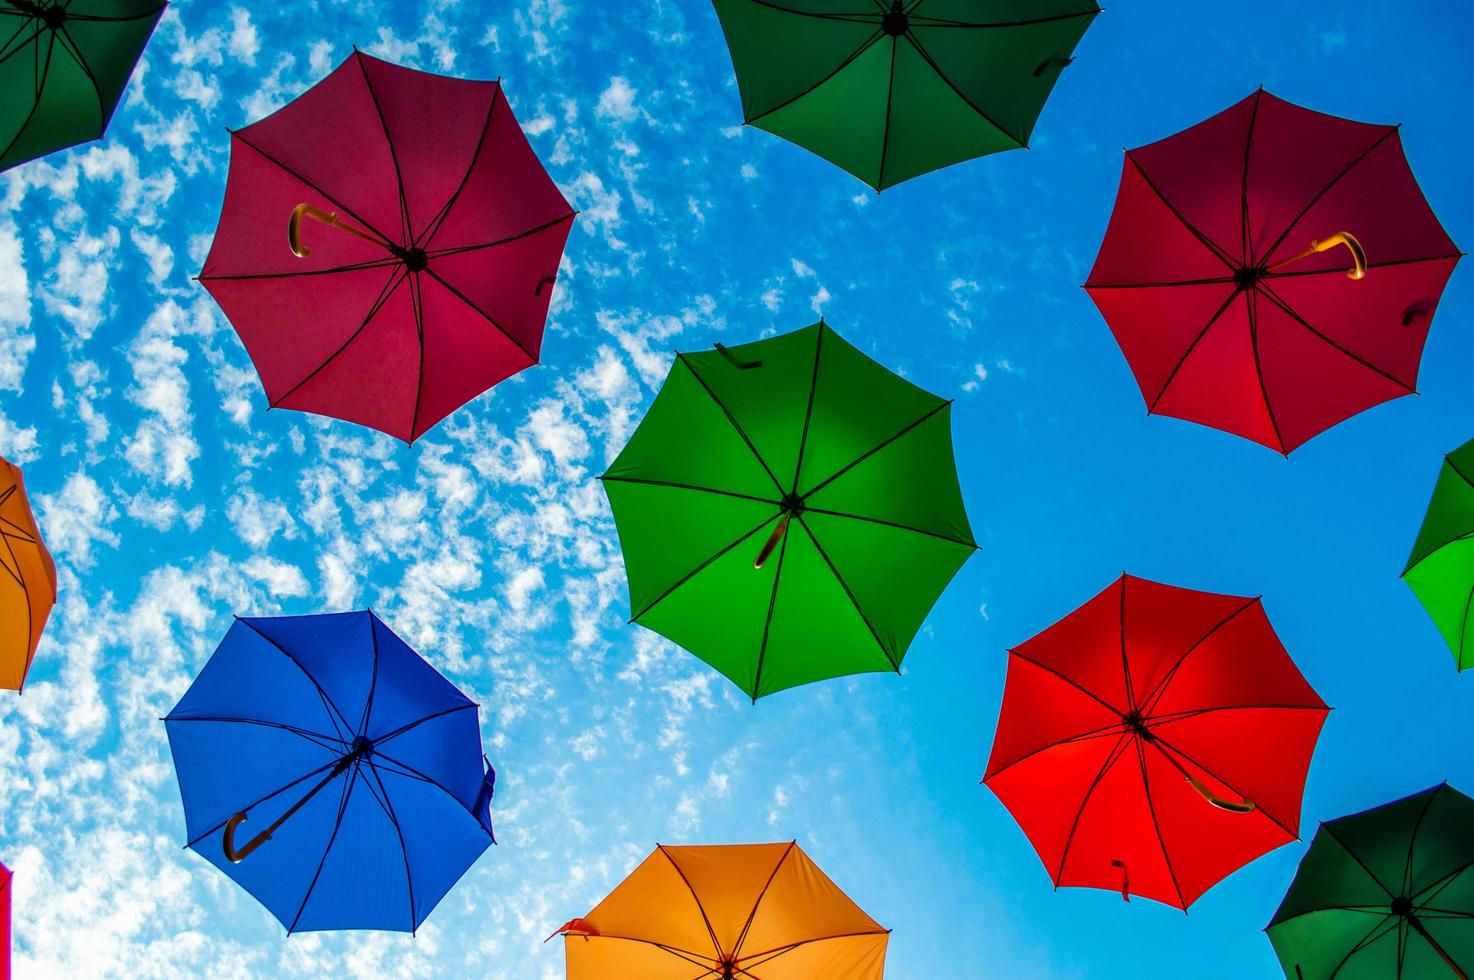 Multi colored umbrellas with blue sky photo